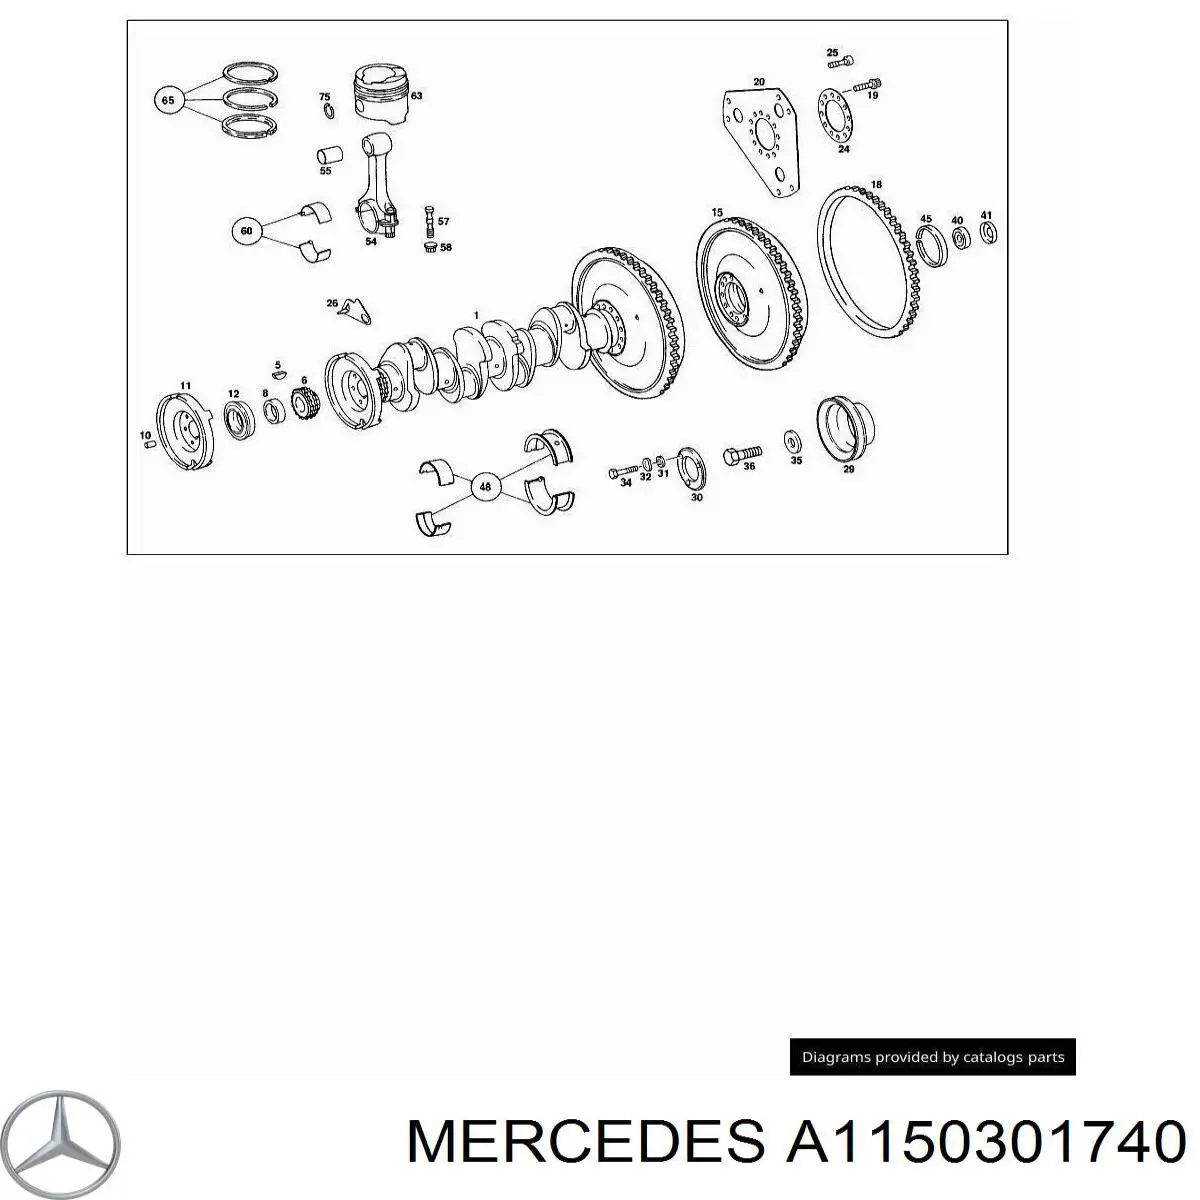 A1150301740 Mercedes вкладыши коленвала коренные, комплект, стандарт (std)